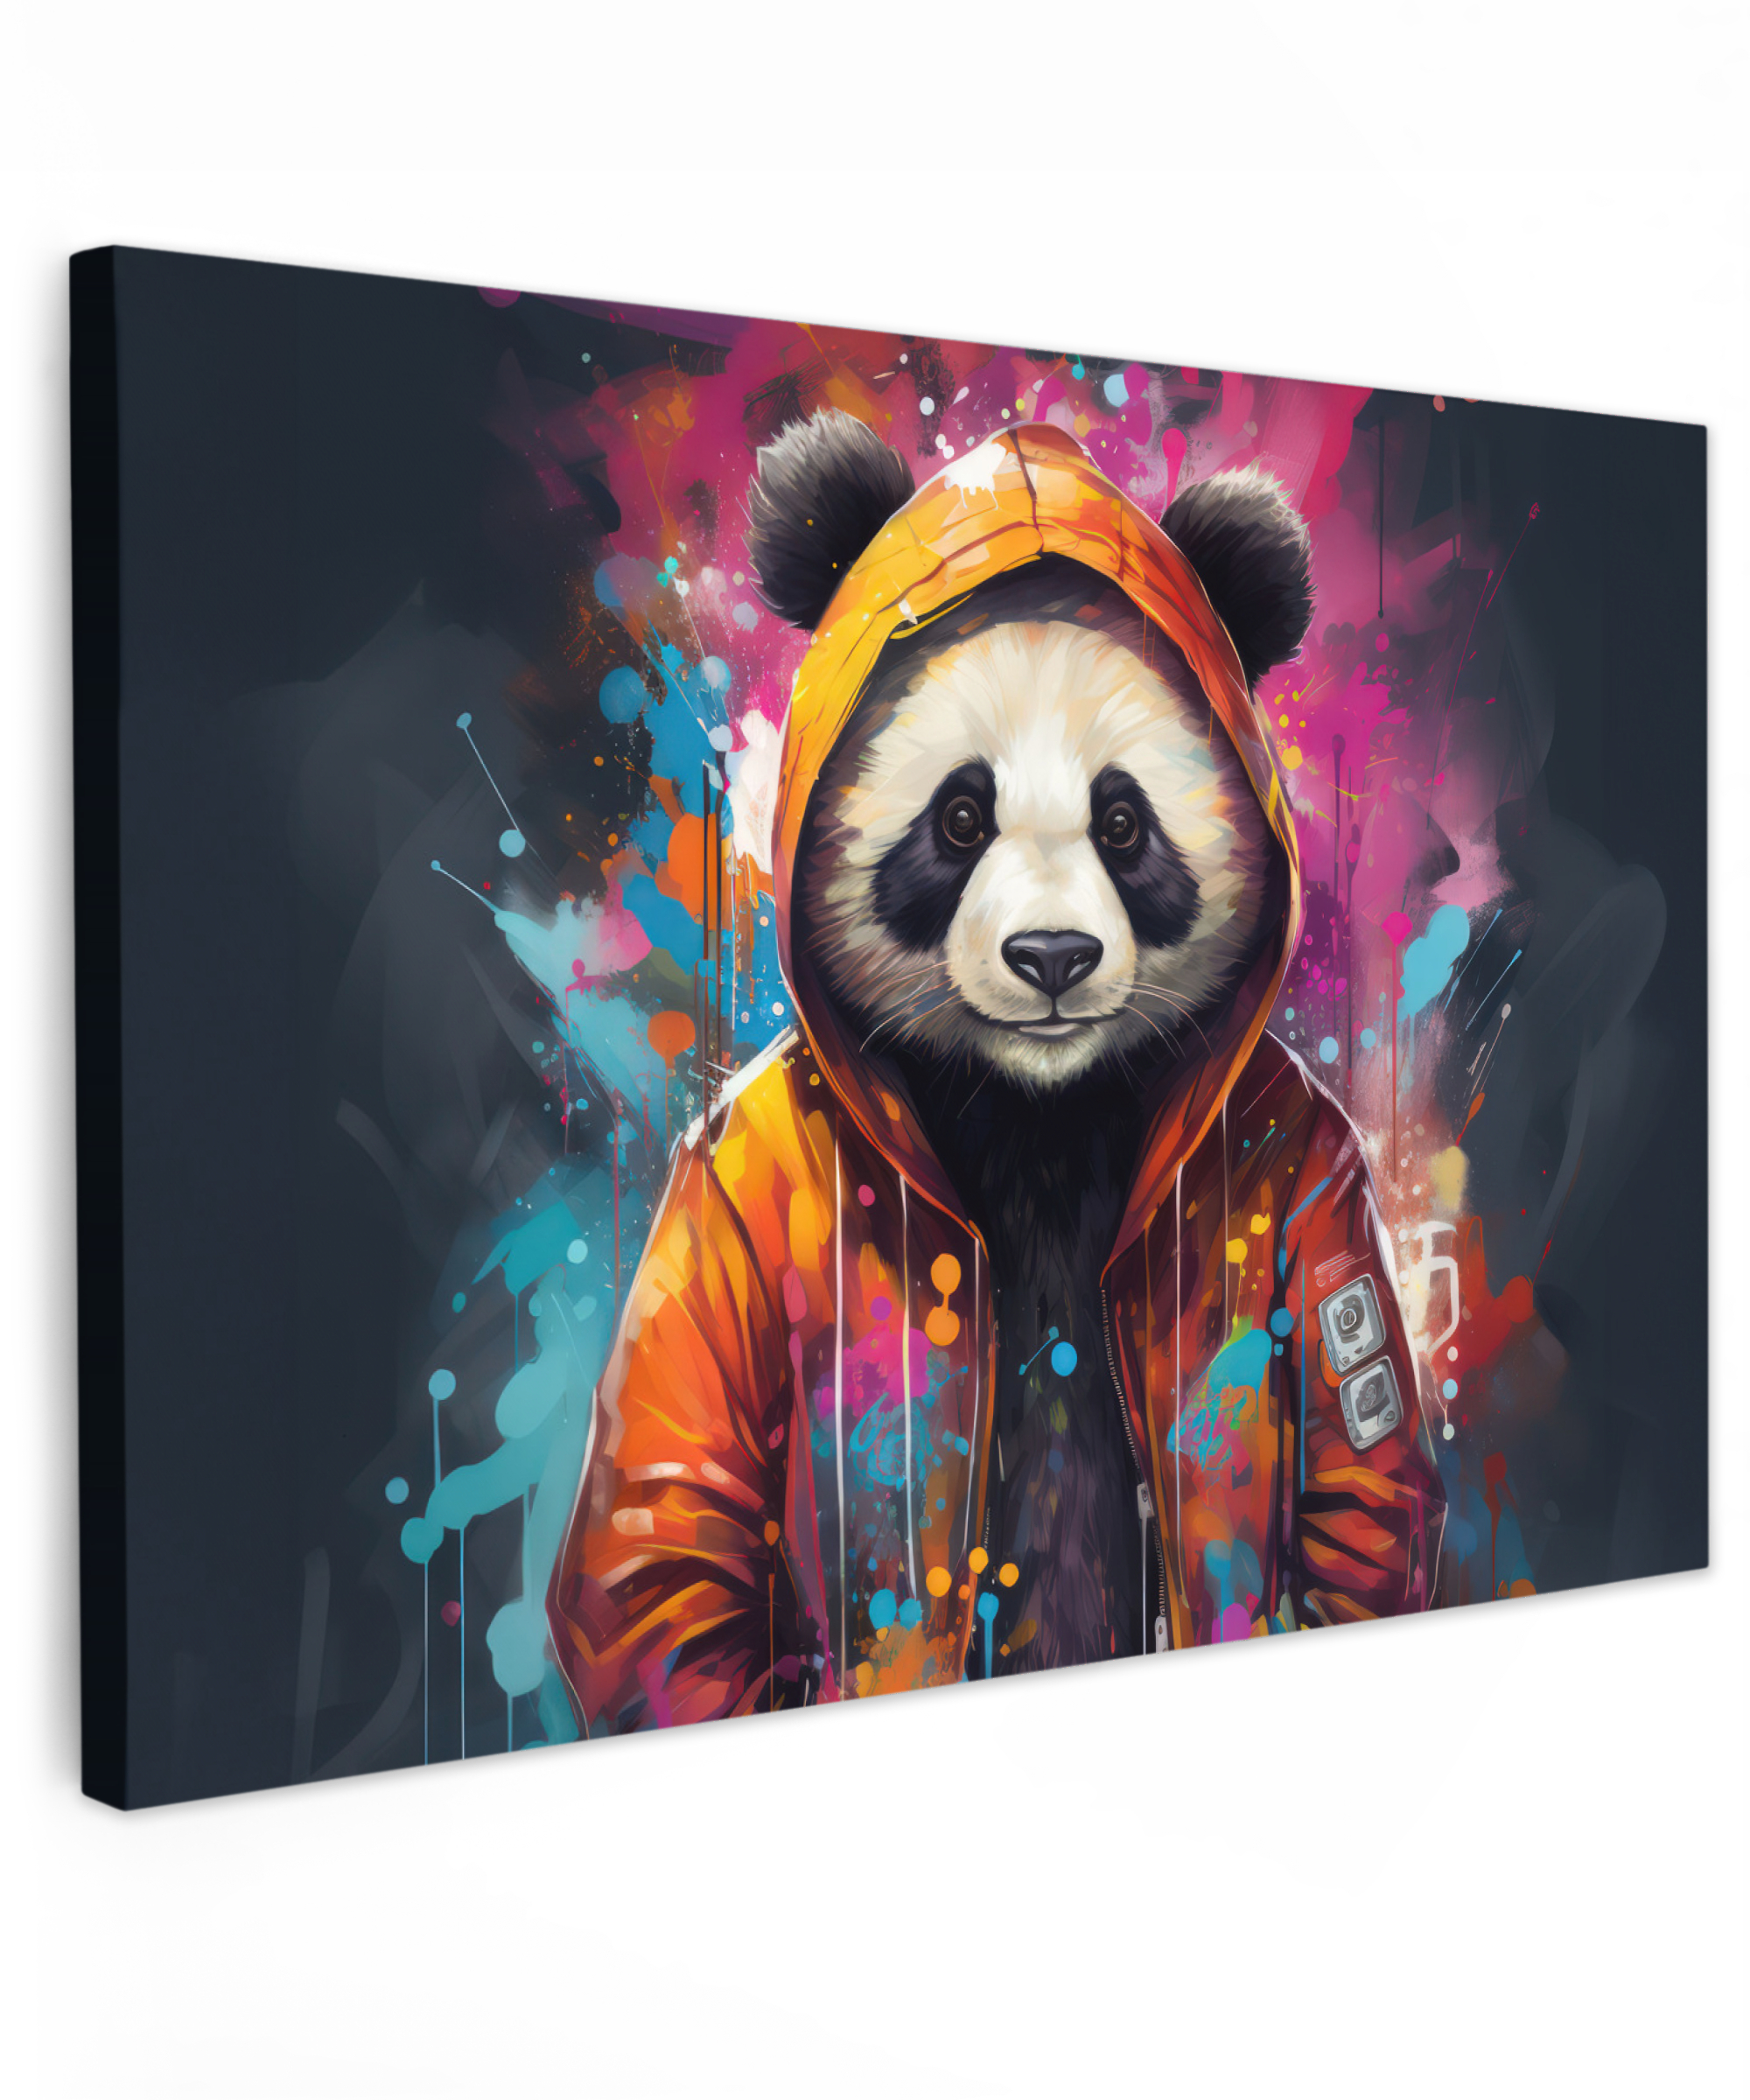 Tableau sur toile - Panda - Manteau - Graffiti - Orange